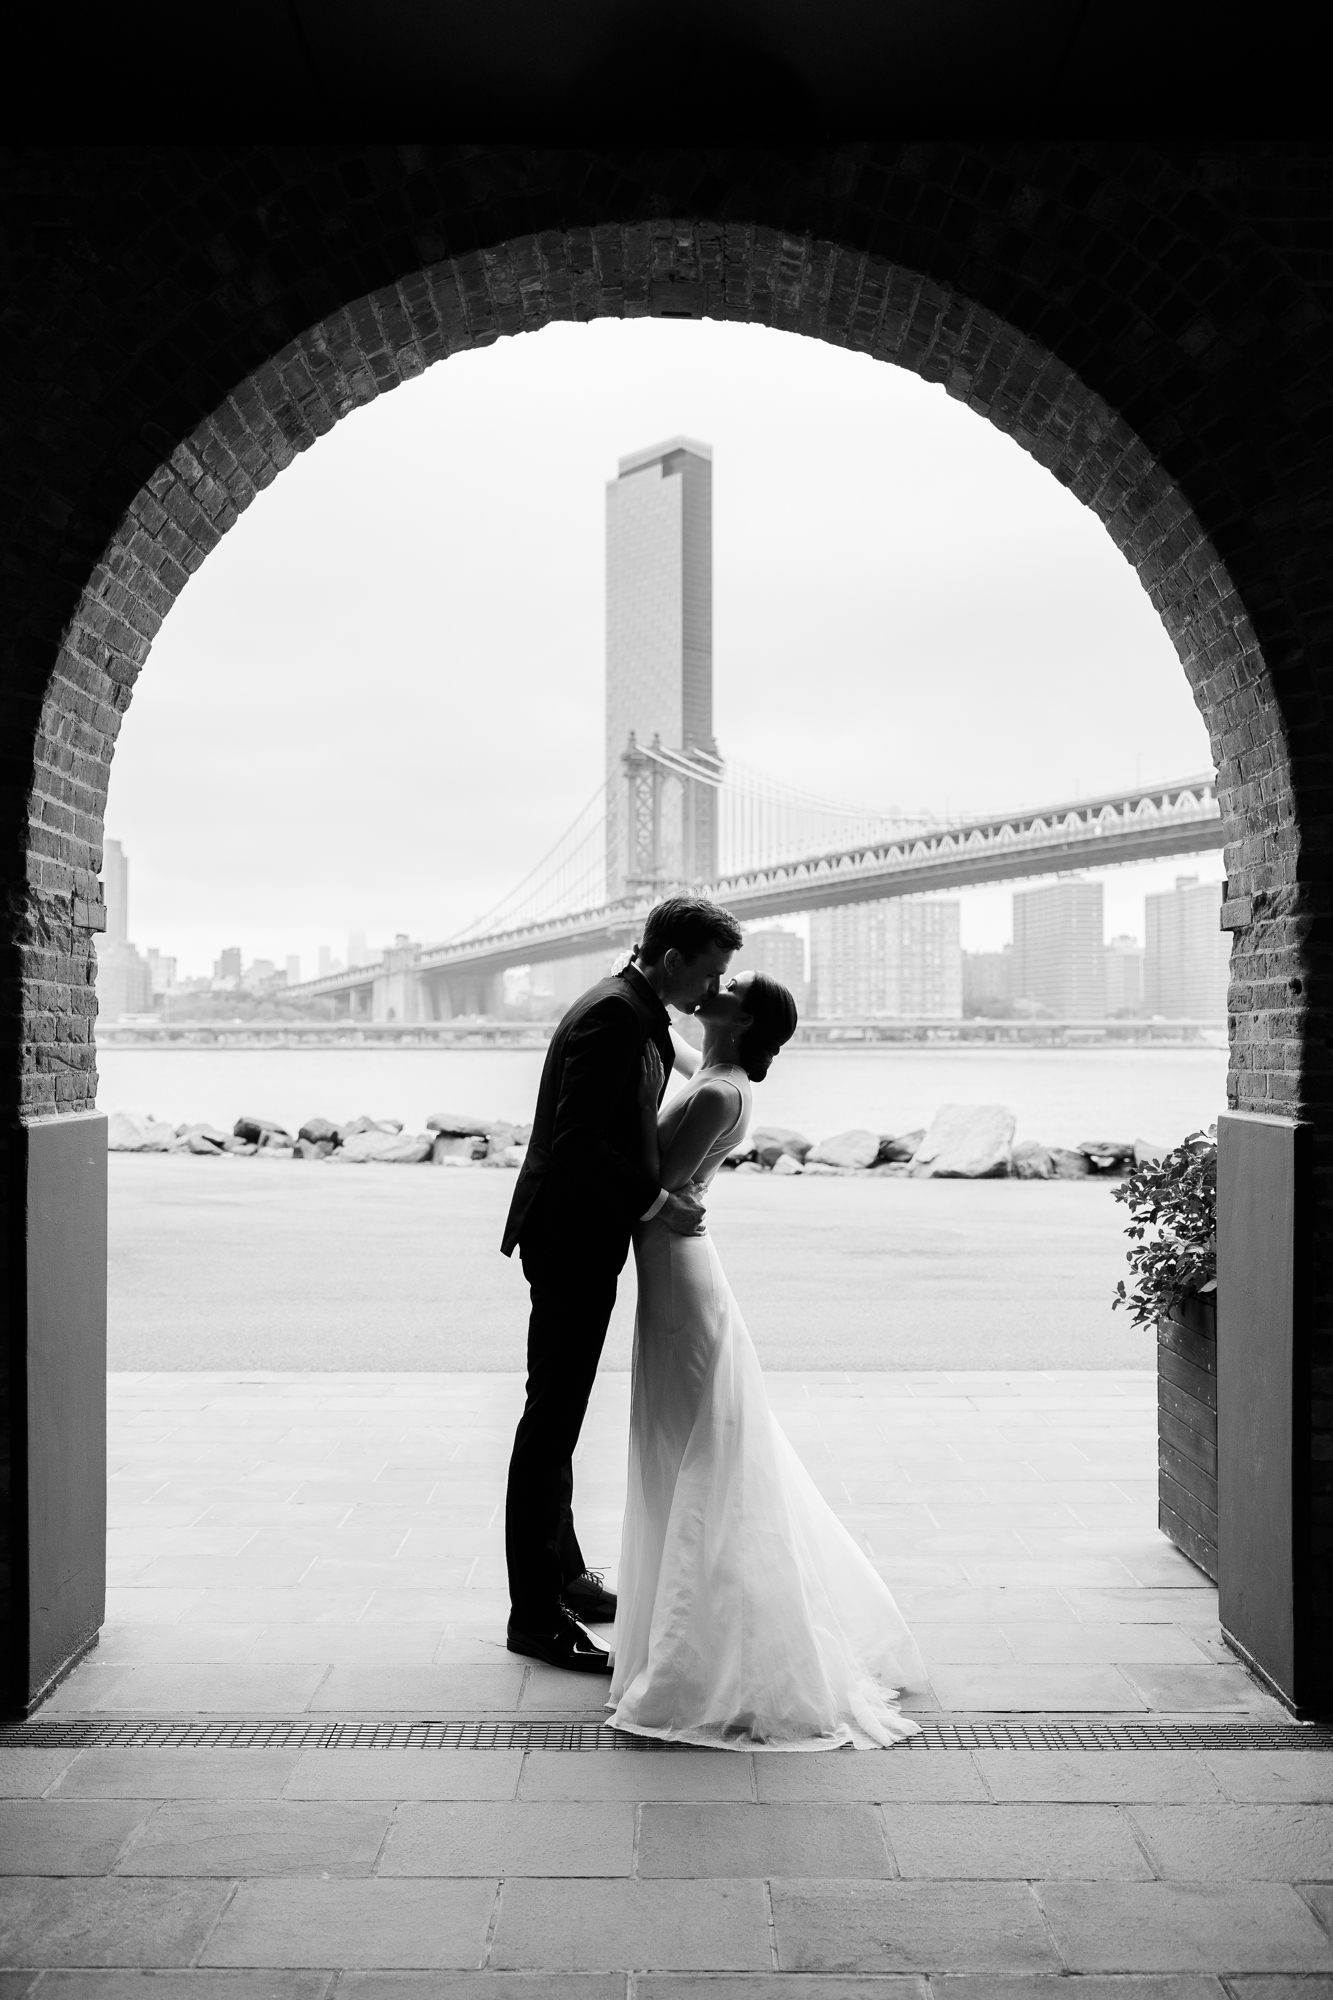 Experienced New York wedding photographers